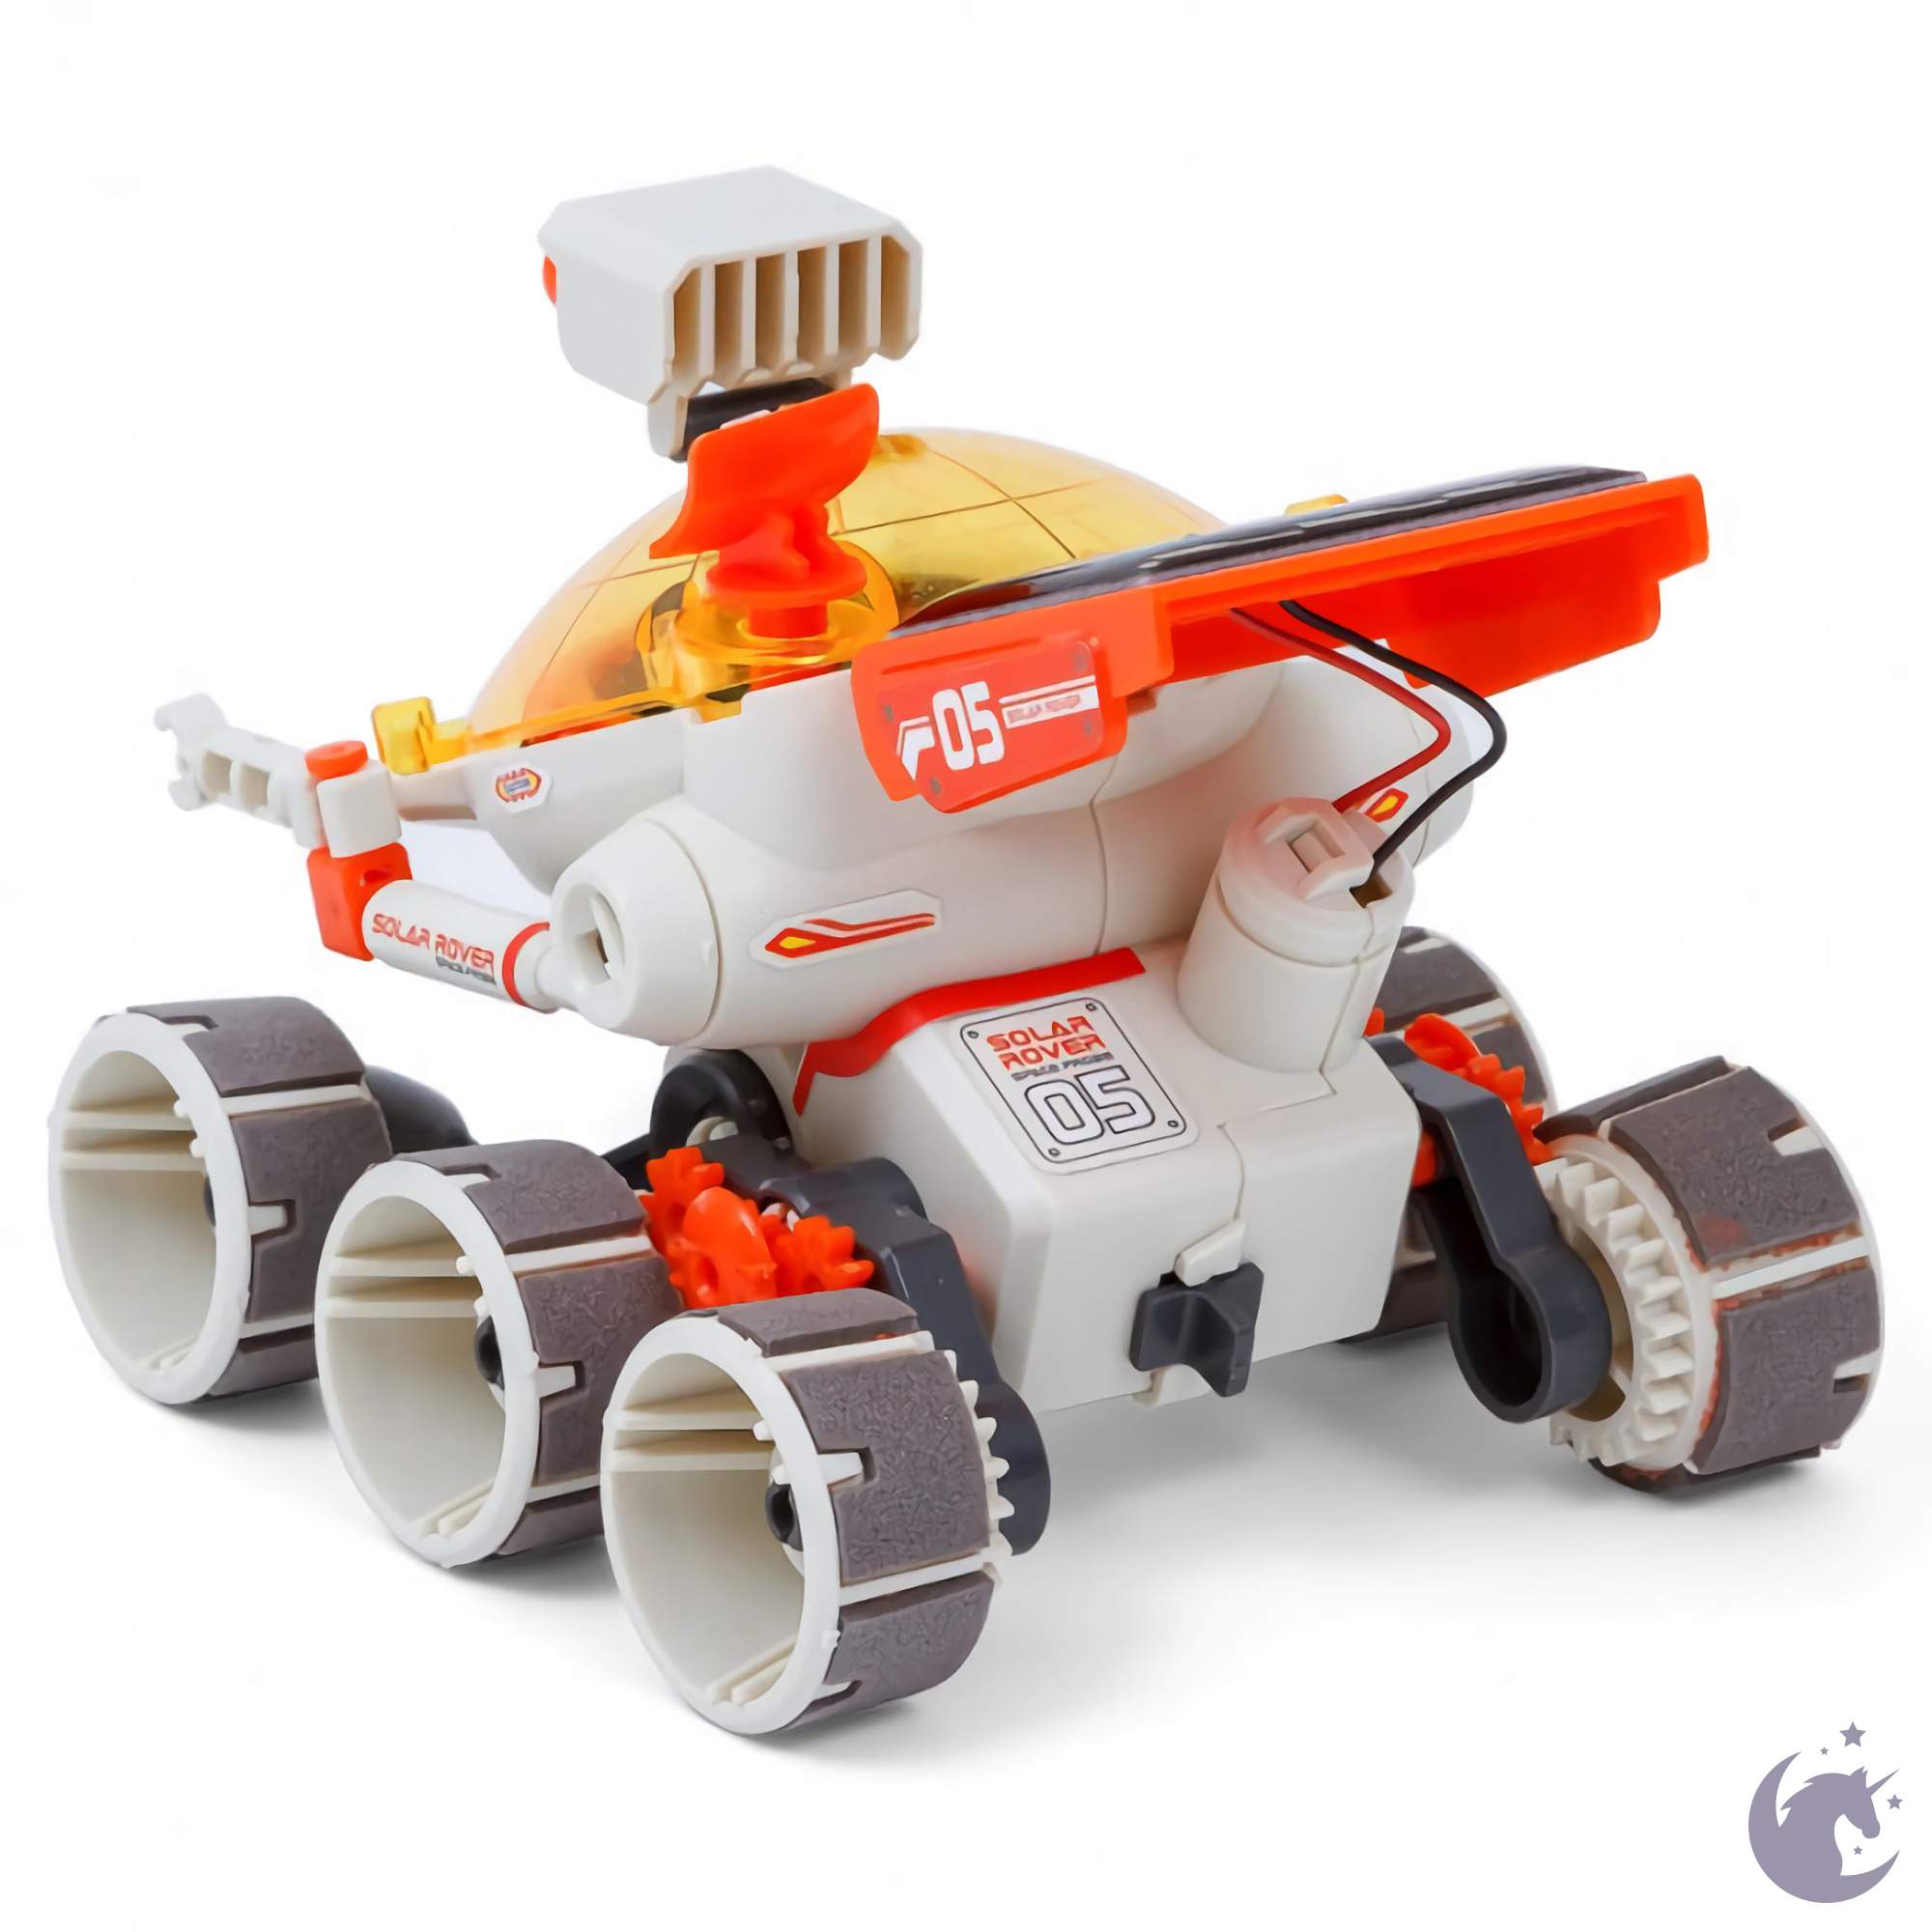 unicorntoys cic kits solar rover education robot kit engineering stem toys for kids CIC21-684